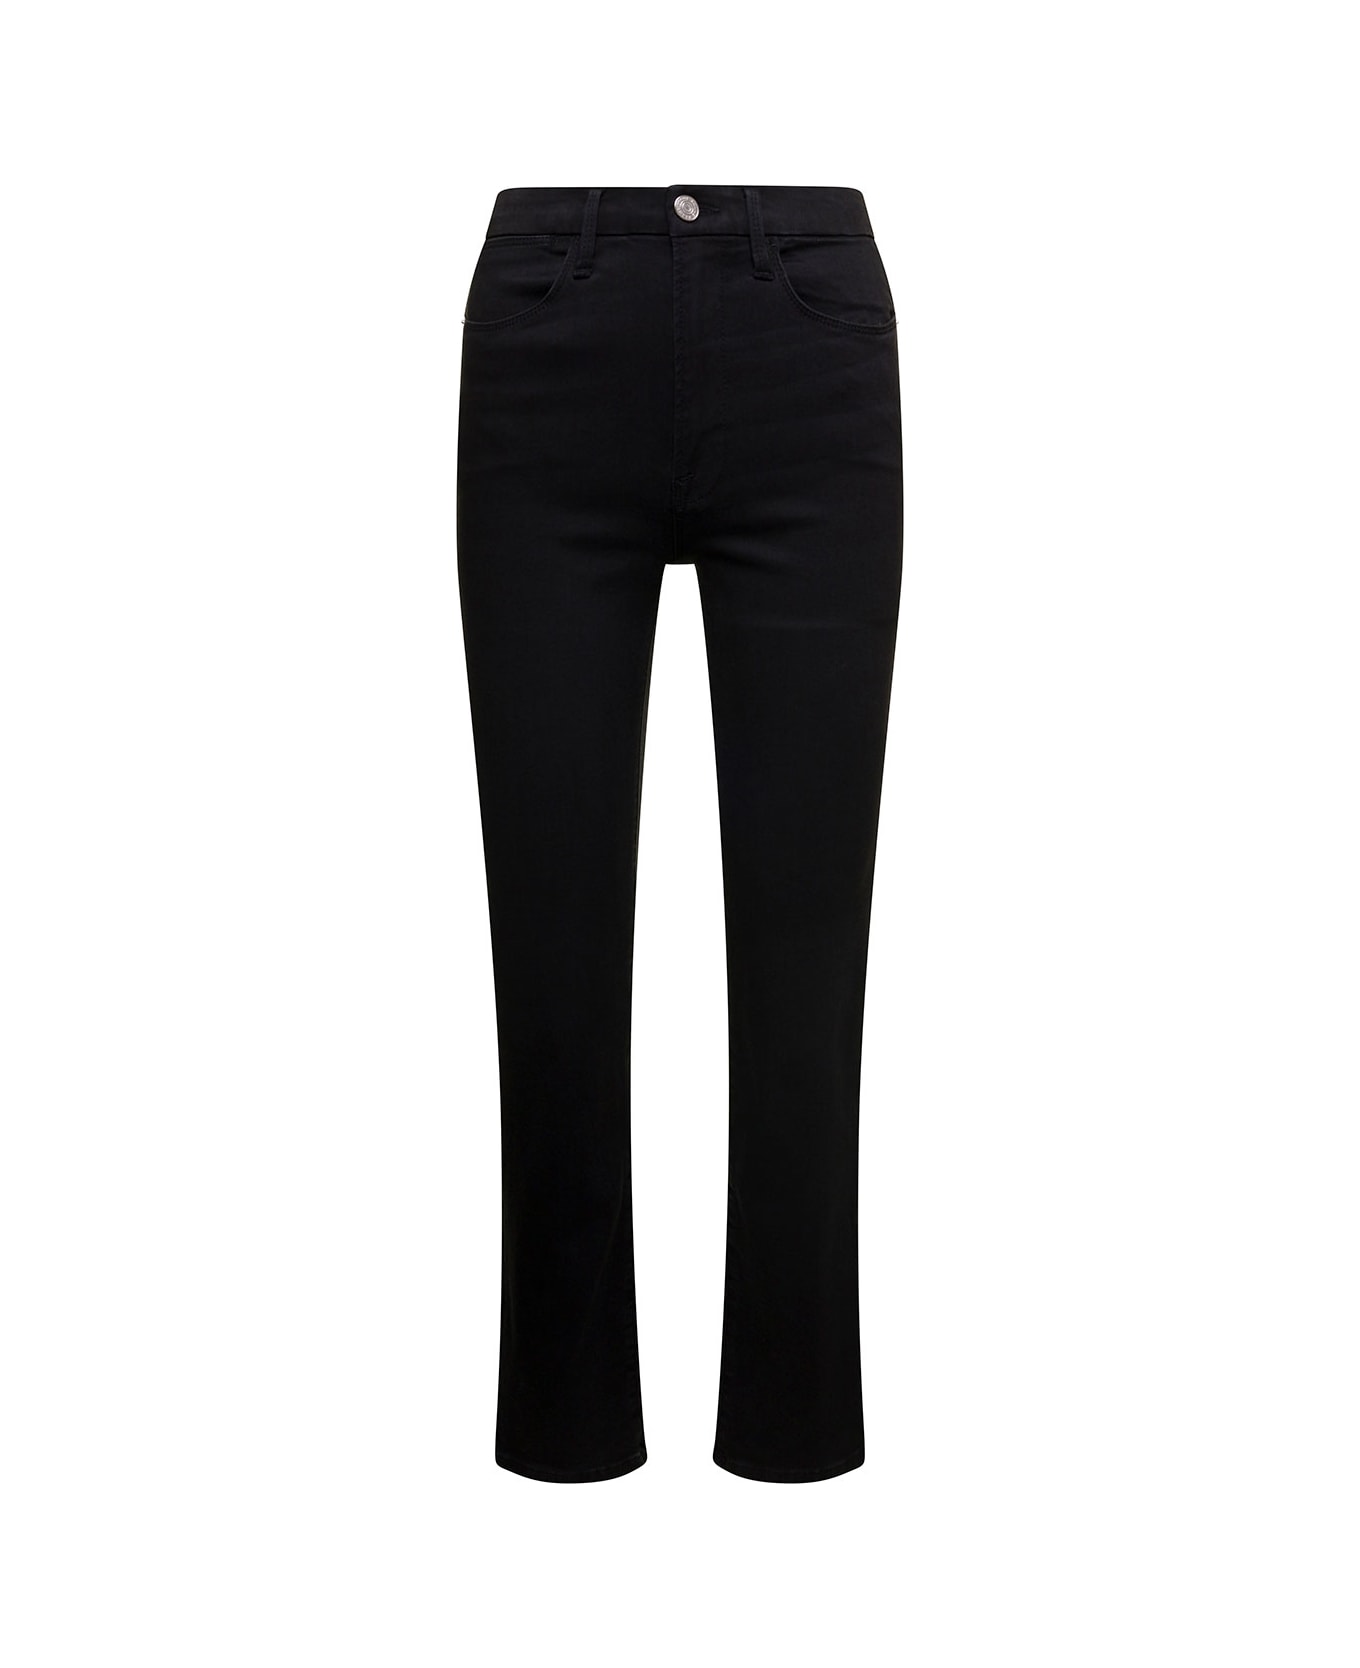 Frame 'le Shape' Black Slim 5 Pockets Jeans In Cotton Blend Denim Woman - Bkfn ボトムス